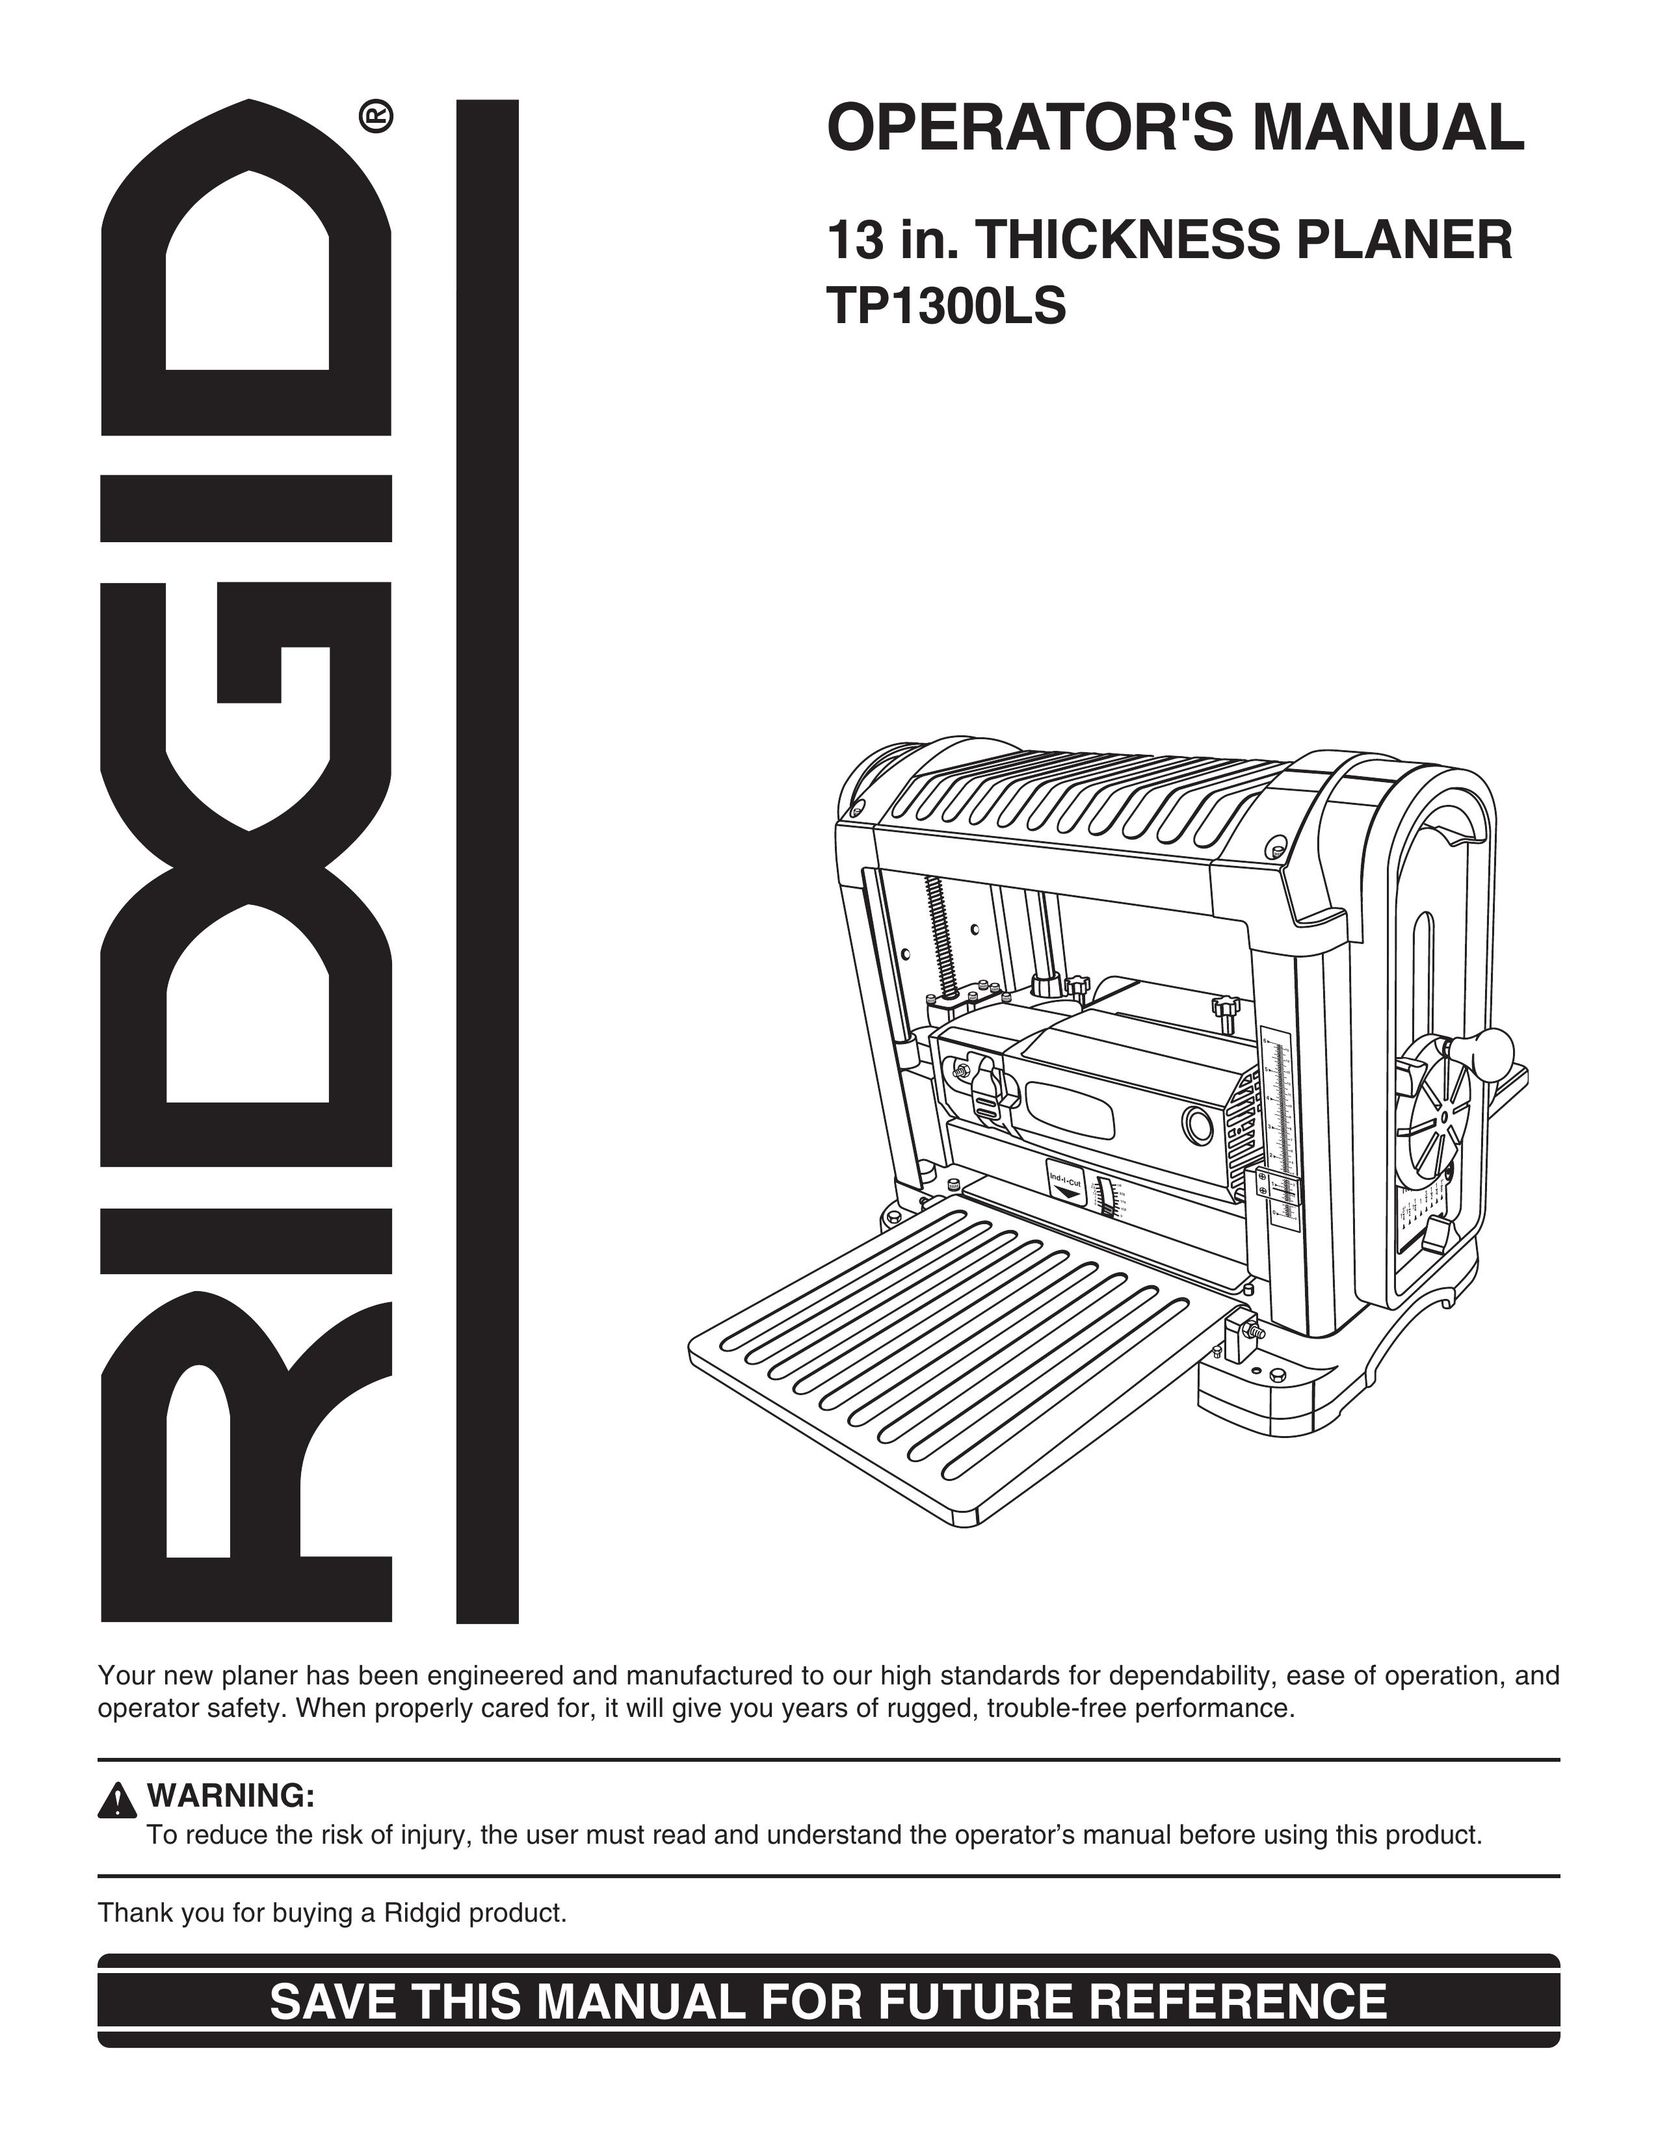 RIDGID TP1300LS Planer User Manual